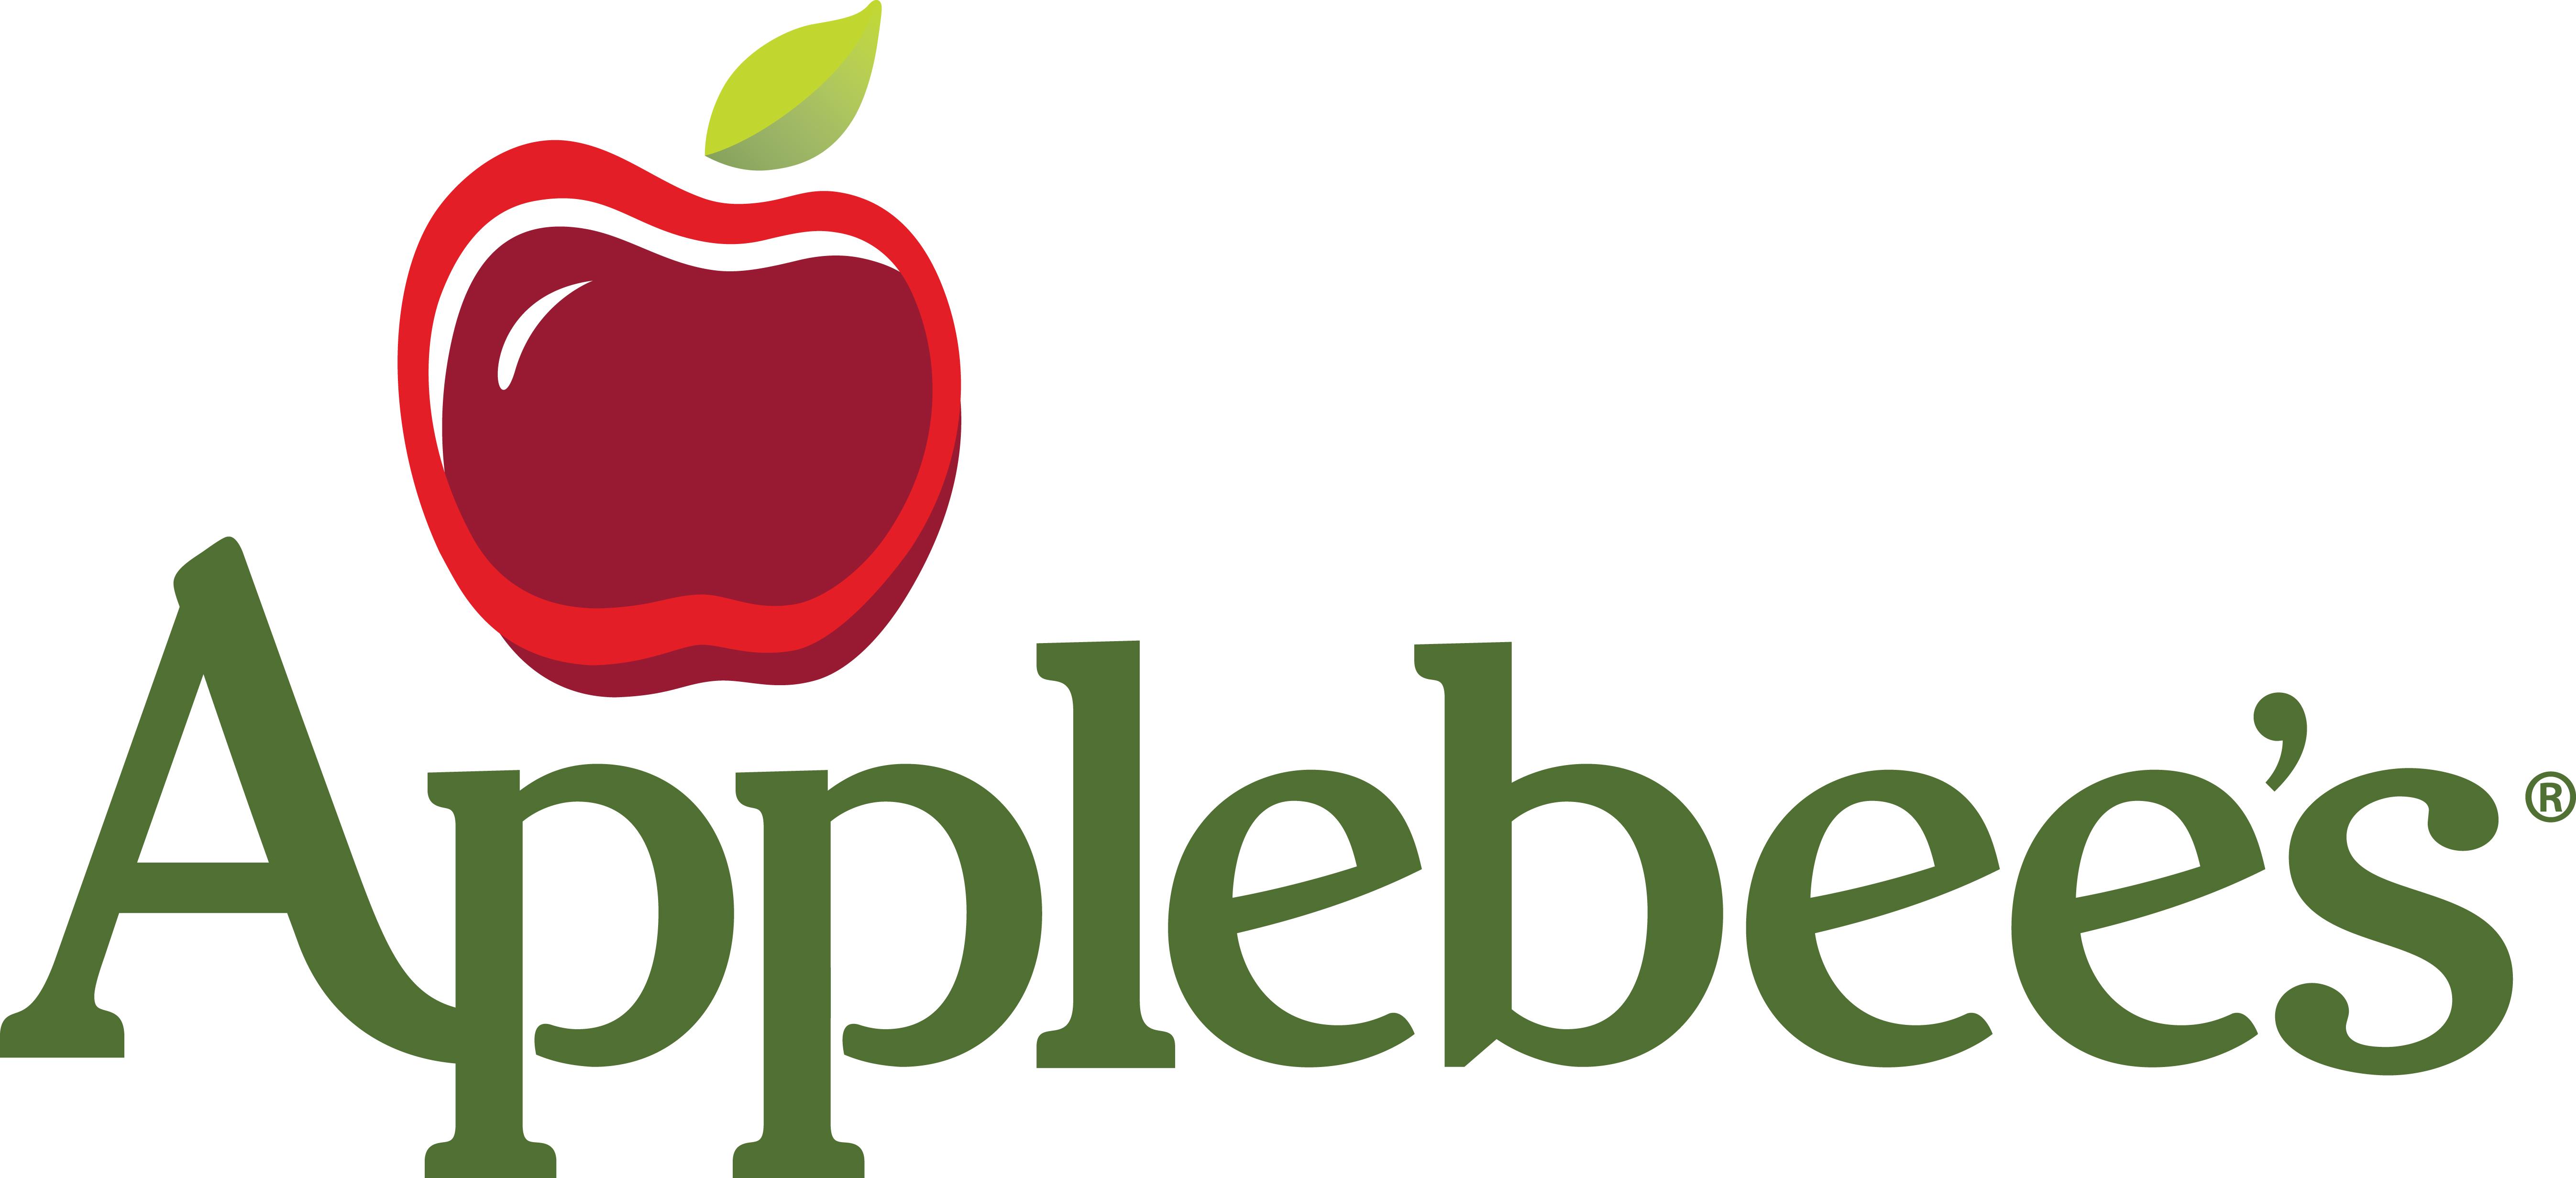 Applebee's 2013 Logo - Applebee's logo - Multimedia - Communities In Schools of Tacoma